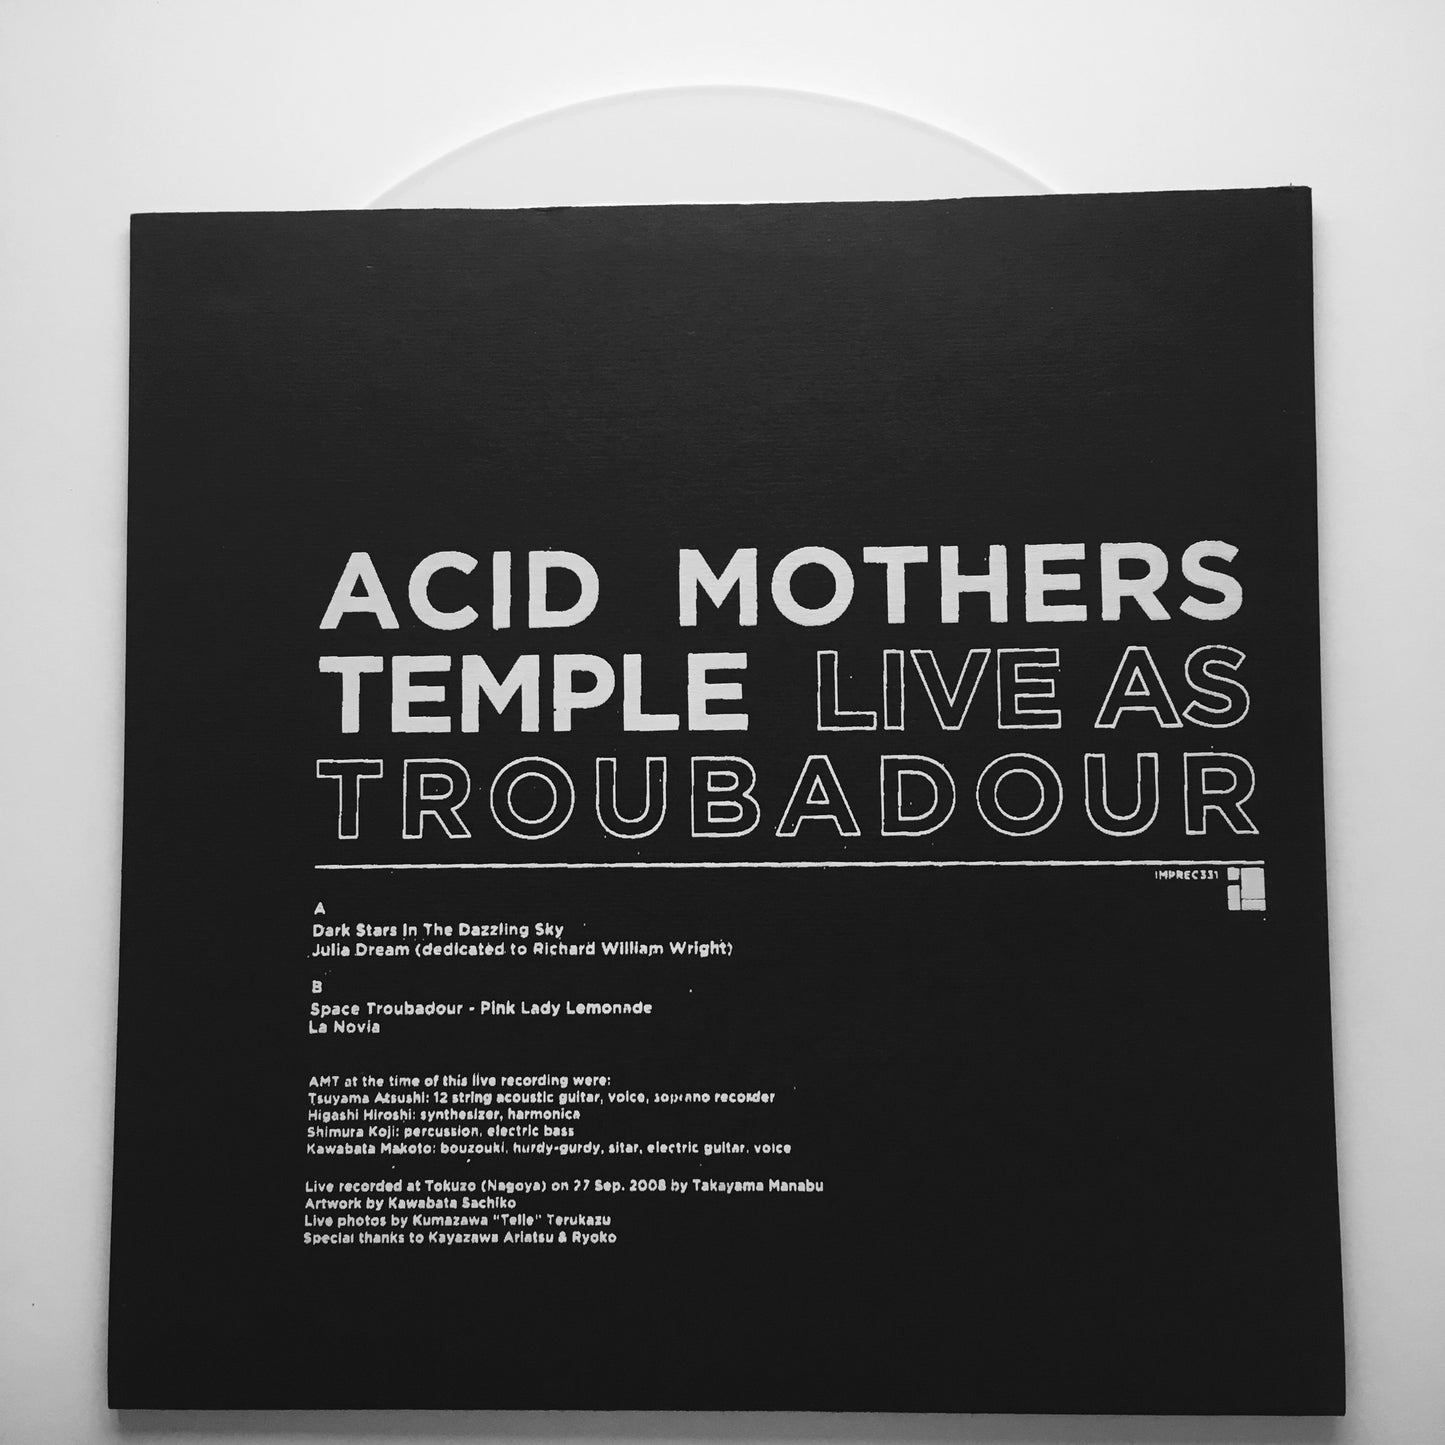 Acid Mothers Temple & The Melting Paraiso U.F.O. - Live As Troubador - LP